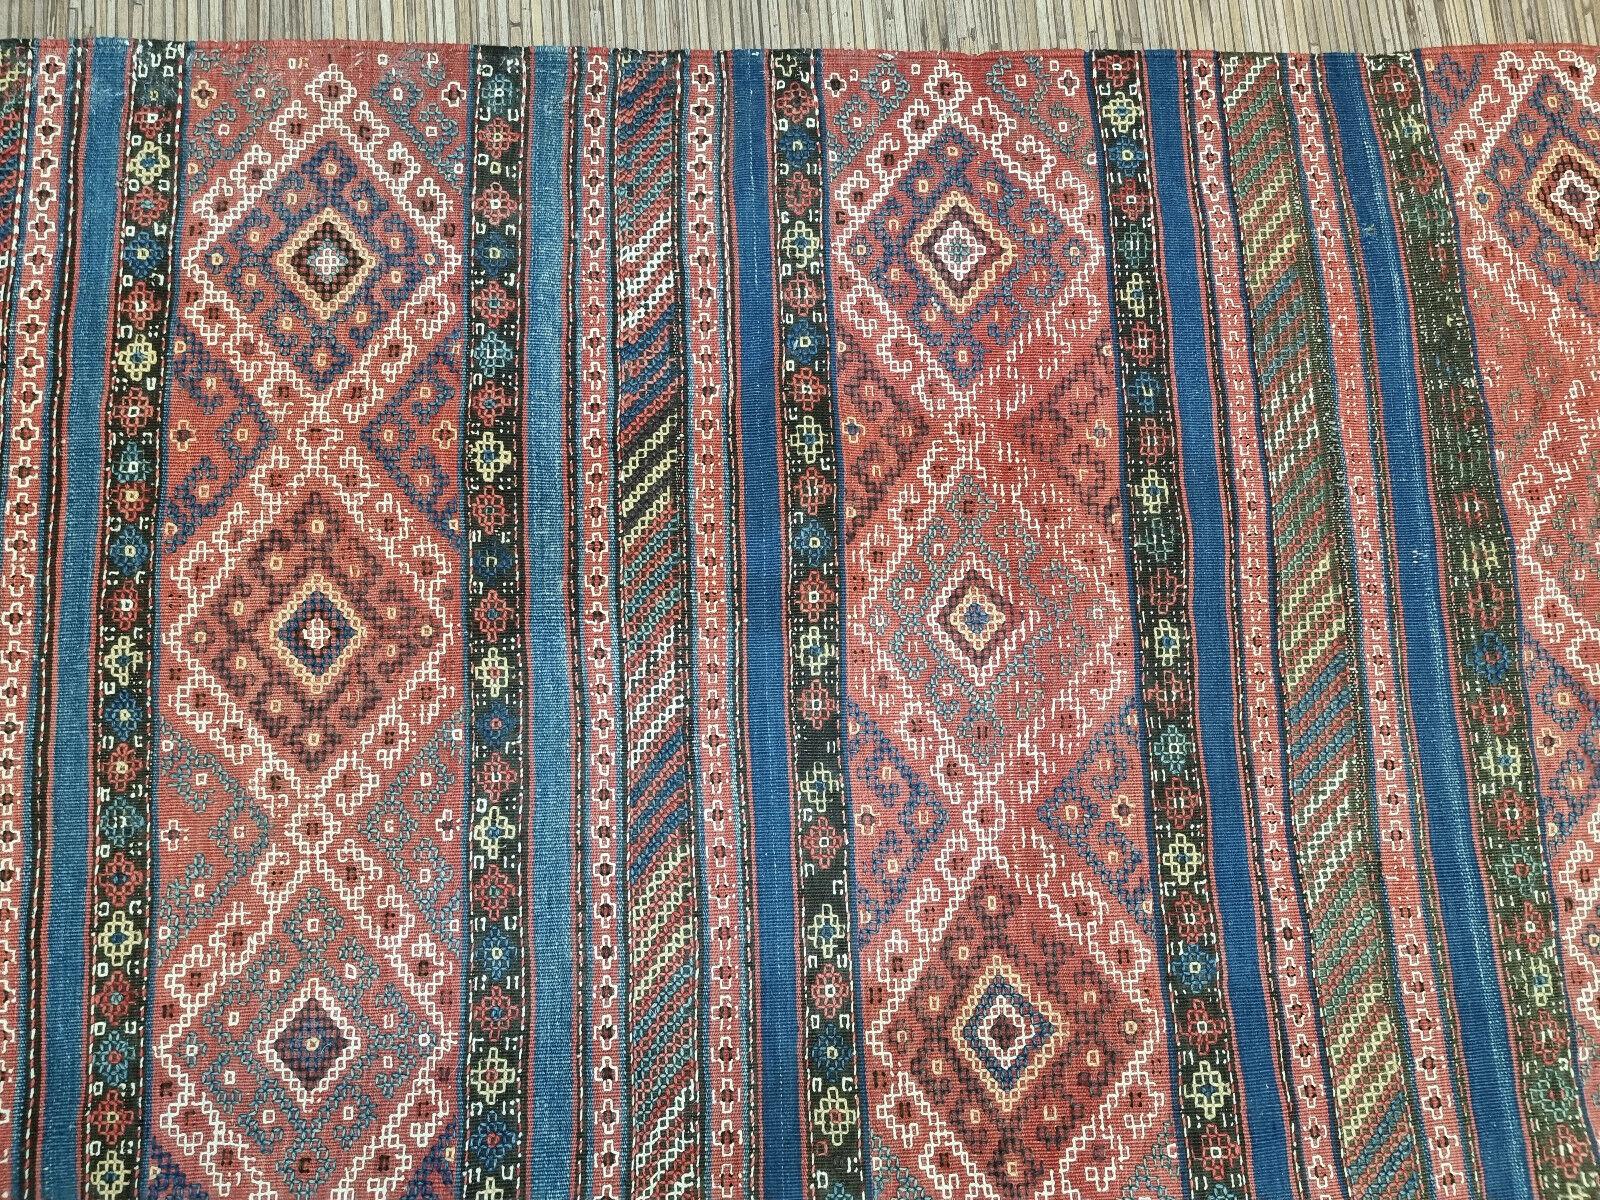 Handmade Antique Persian Style Sumak Kilim Rug 5.4' x 7', 1920s - 1D86 4